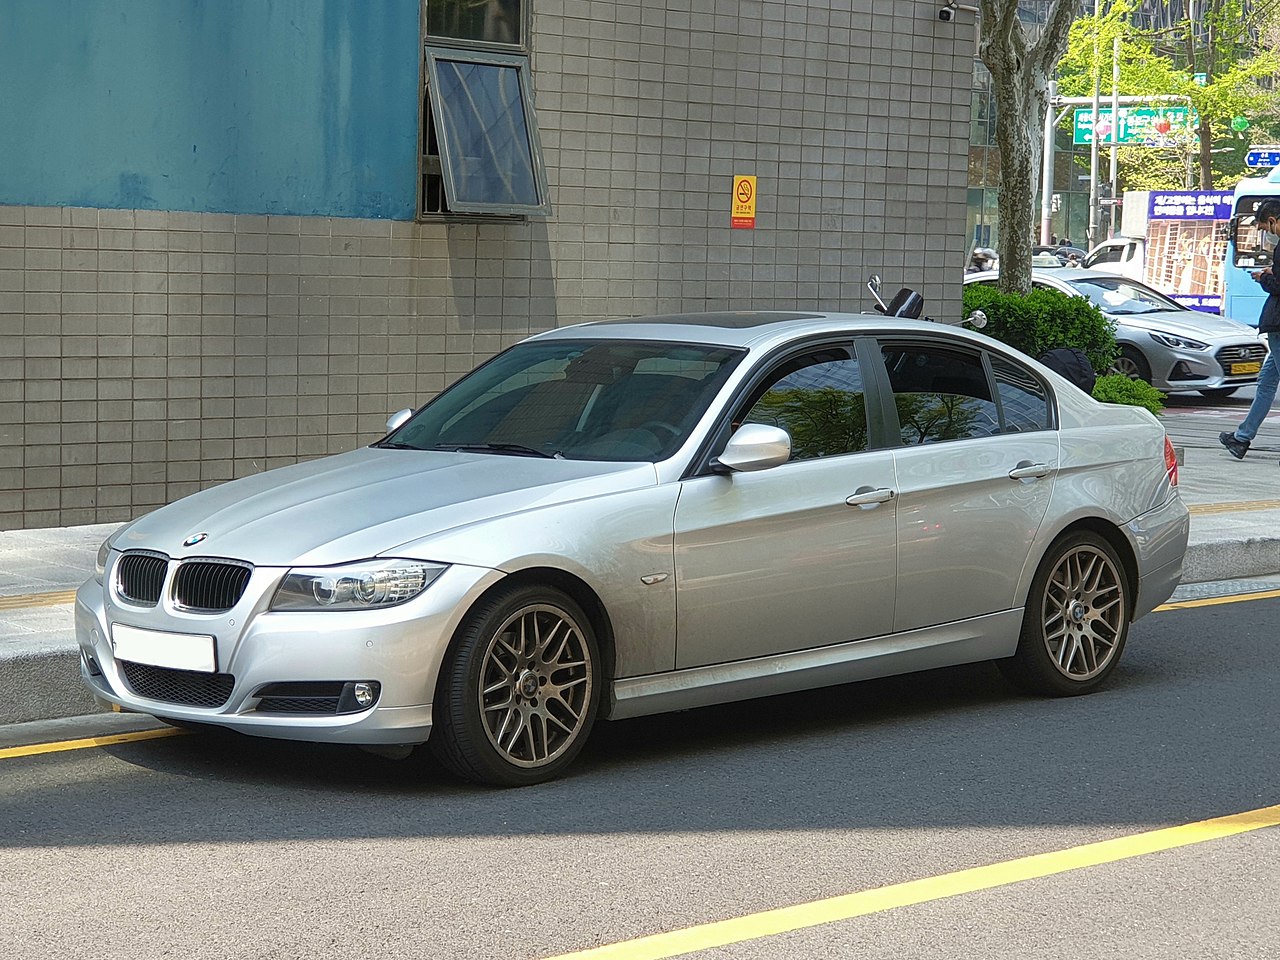 File:BMW E90 320d Titanium Silver (1).jpg - Wikimedia Commons